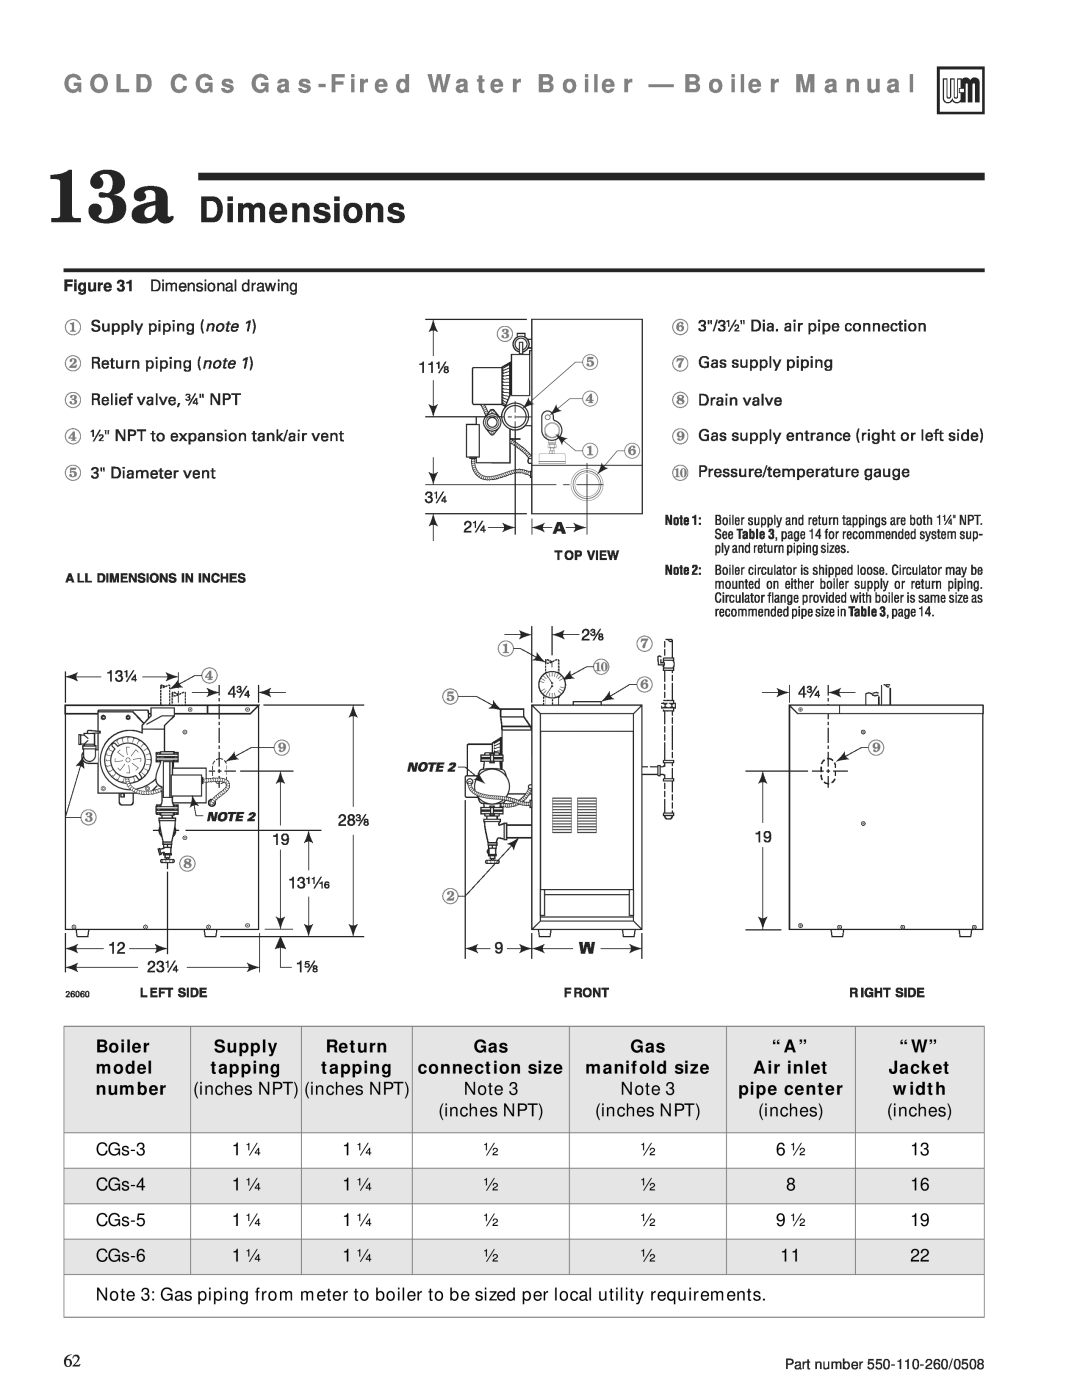 Weil-McLain 550-110-260/0508 manual 13a Dimensions, GOLD CGs Gas-FiredWater Boiler - Boiler Manual 